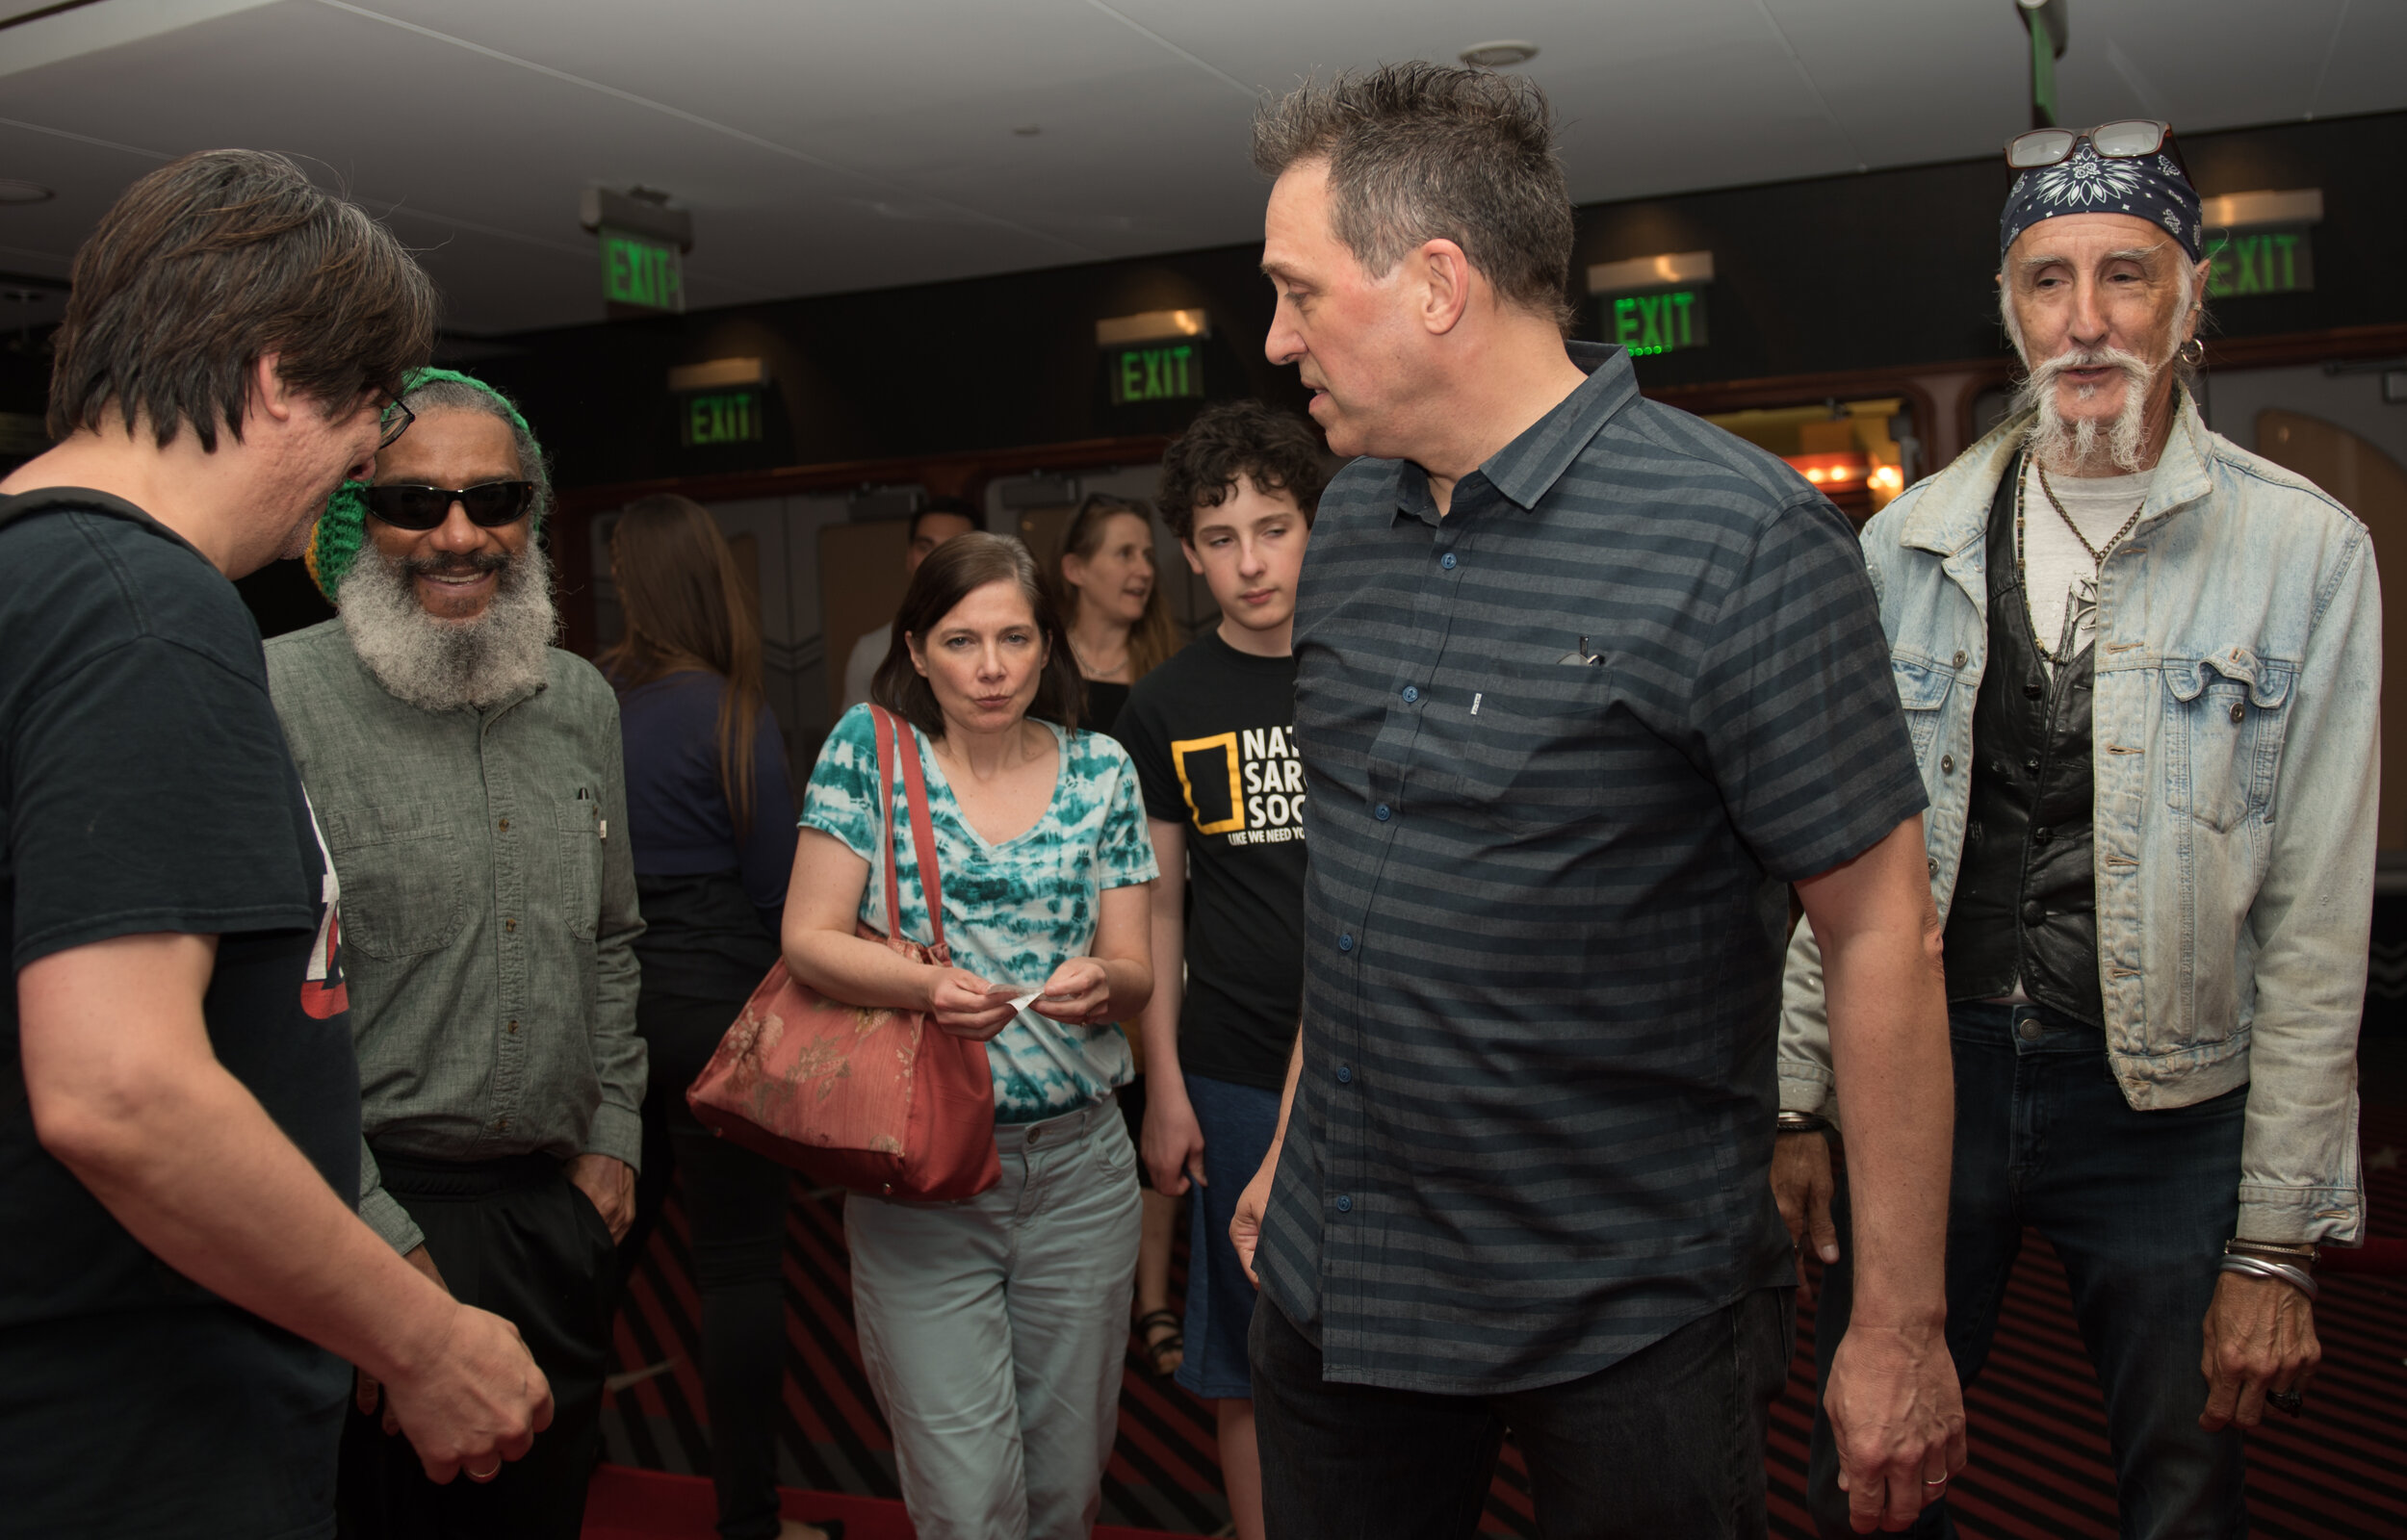  Bert Quieroz, HR (Bad Brains), Nathan Strejcek, and KimKane at the film’s World Premiere at the American Film Institute.  